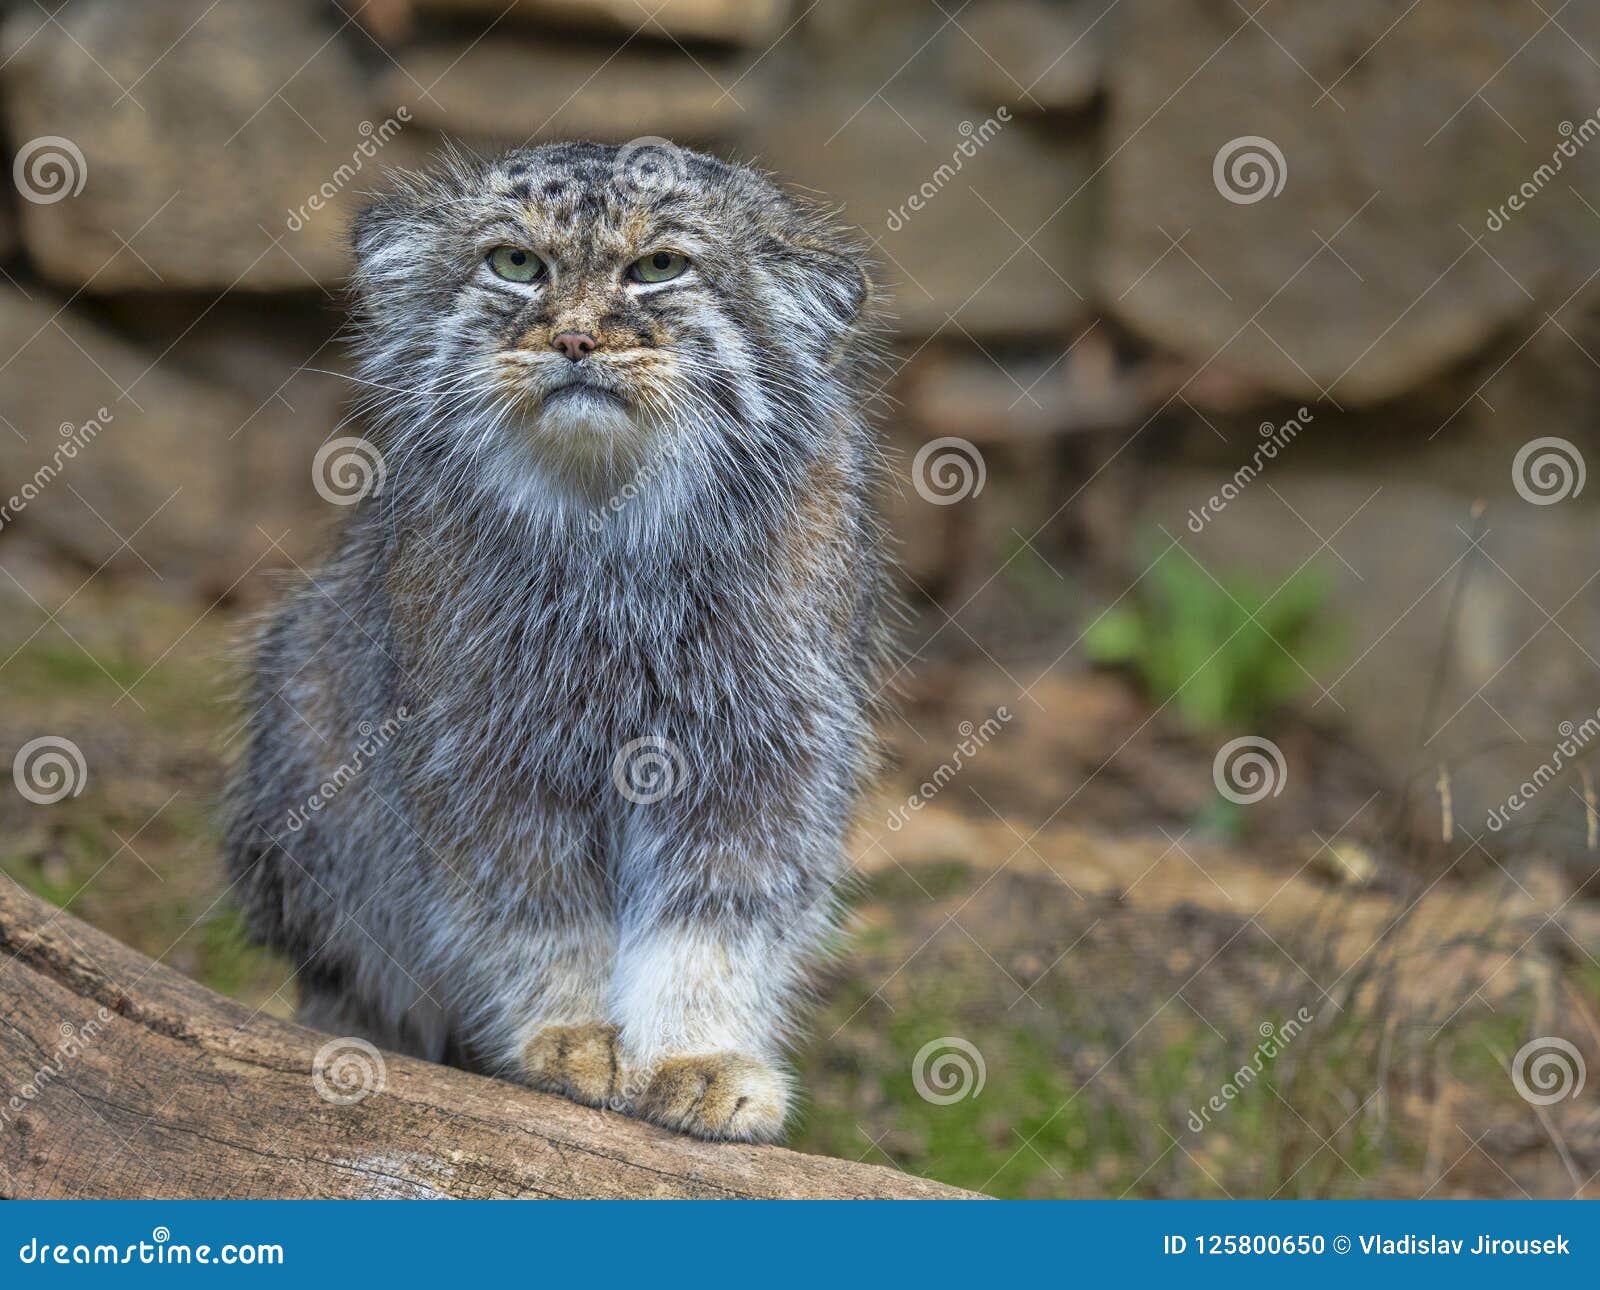 Pallas` Cat, Otocolobus Manul, Portrait Male Photo - Image of cats, 125800650